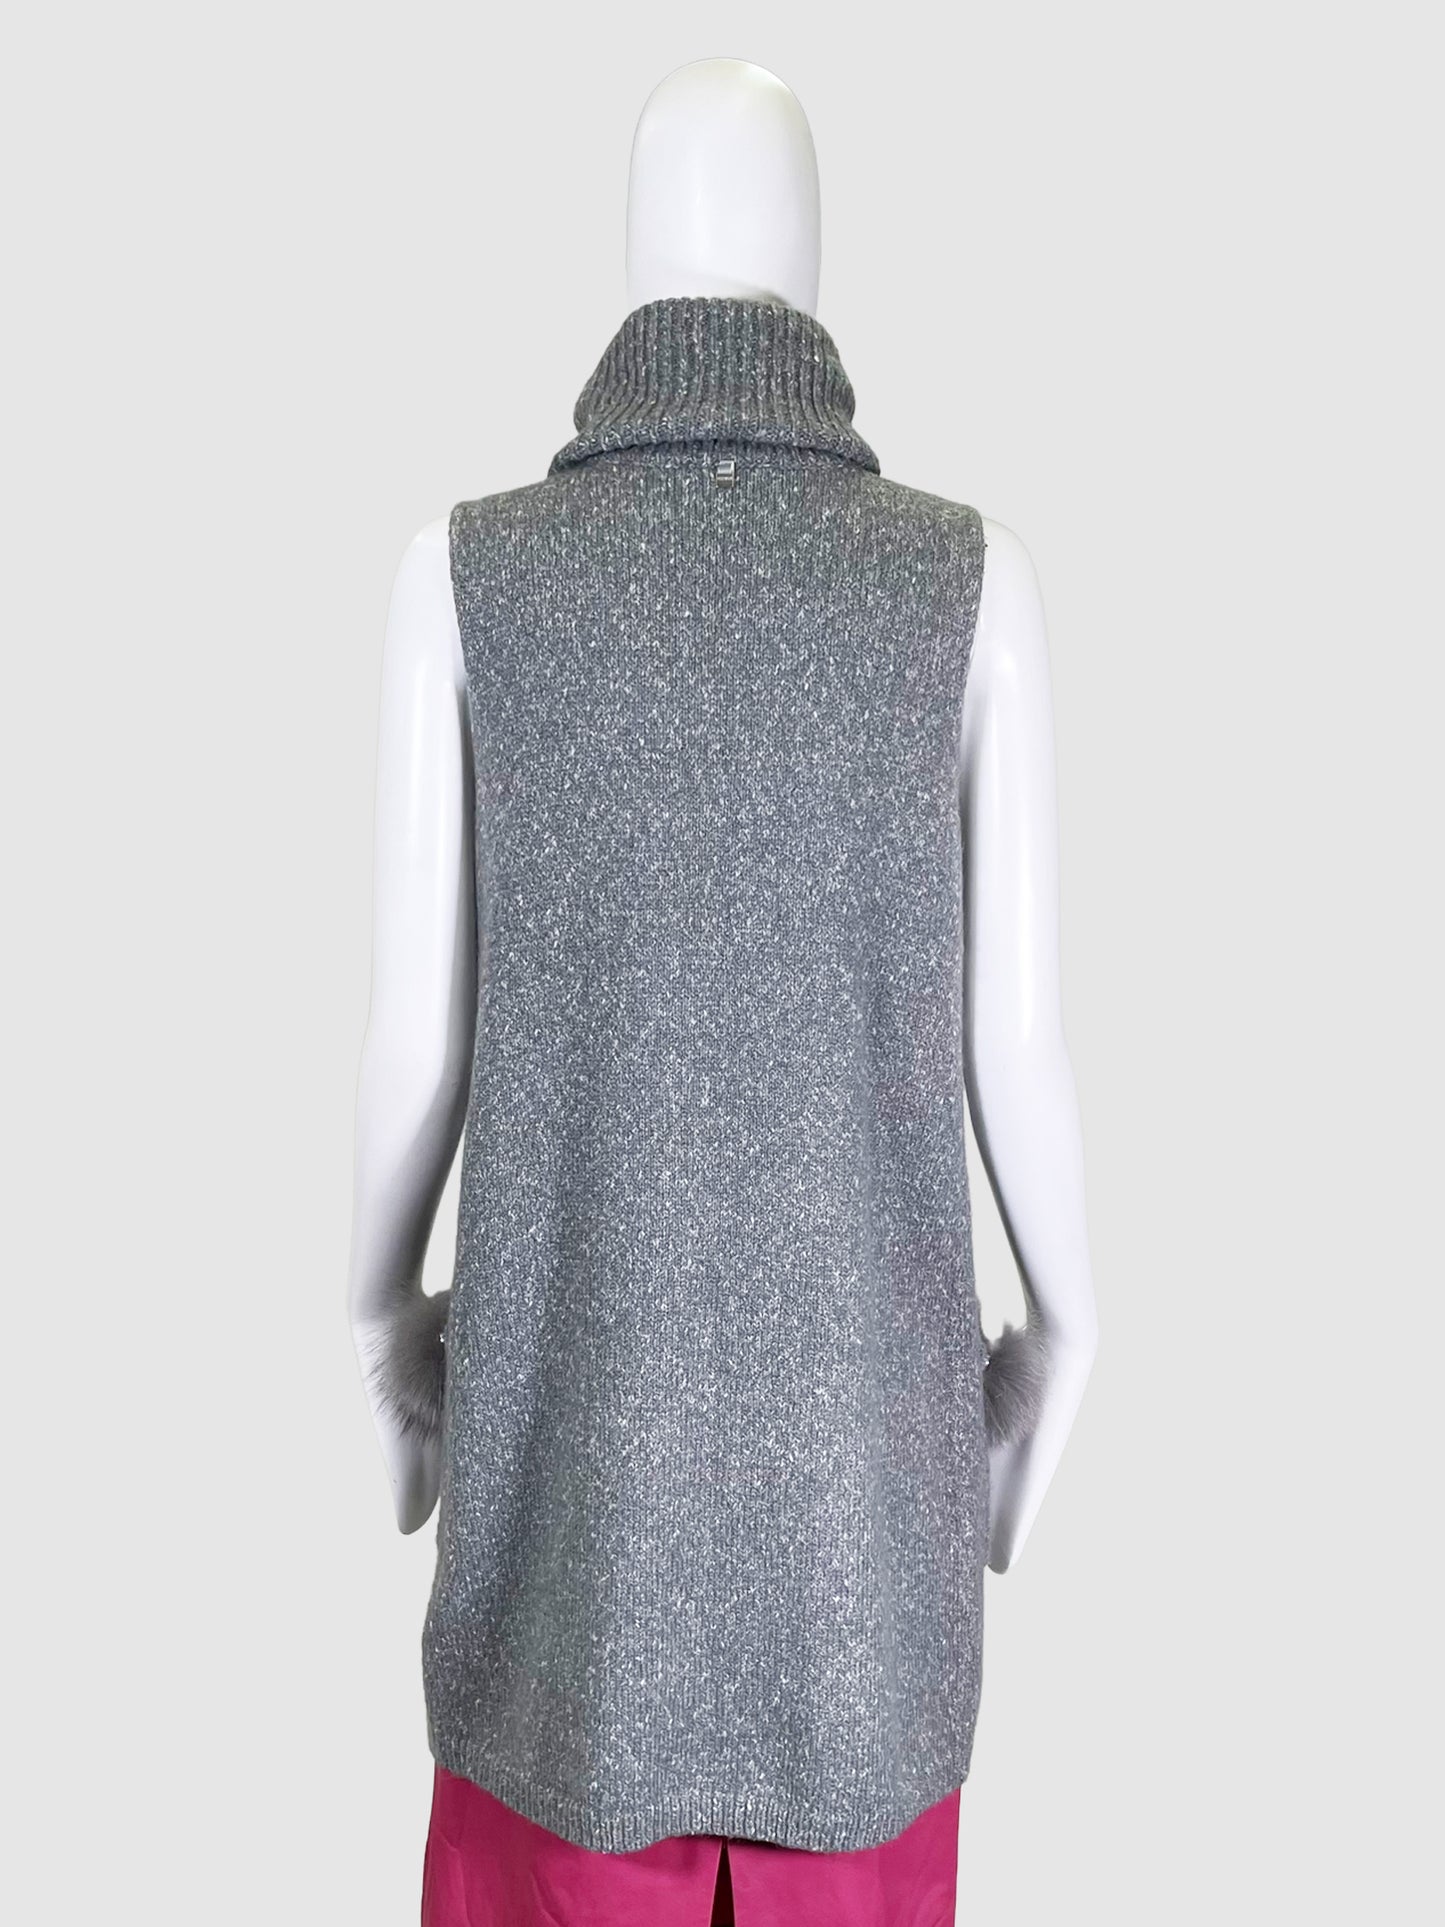 Rudsak Turtleneck Sweater Vest - Size XS/S